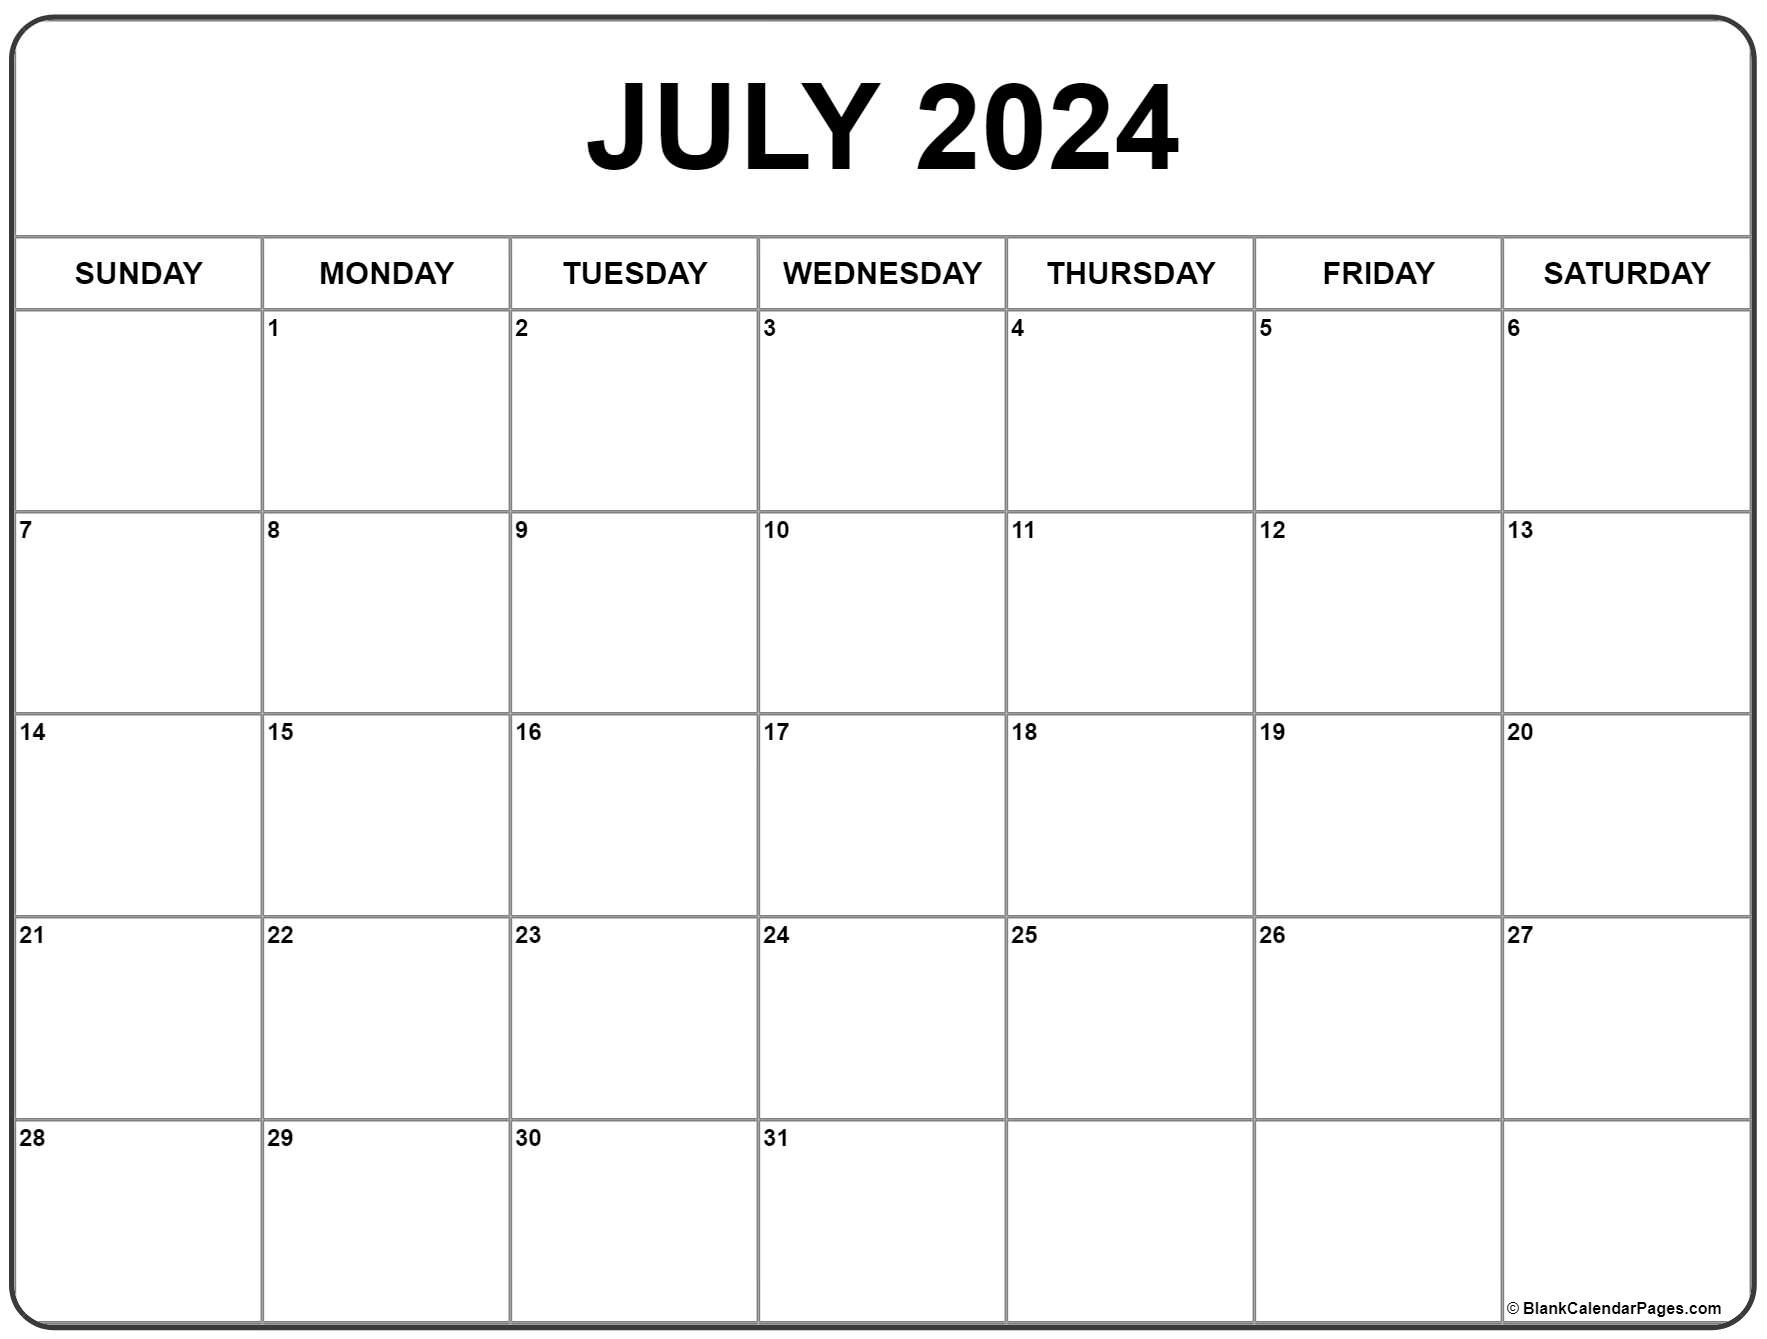 July 2024 Calendar | Free Printable Calendar for July 2024 Calendar Printable Free